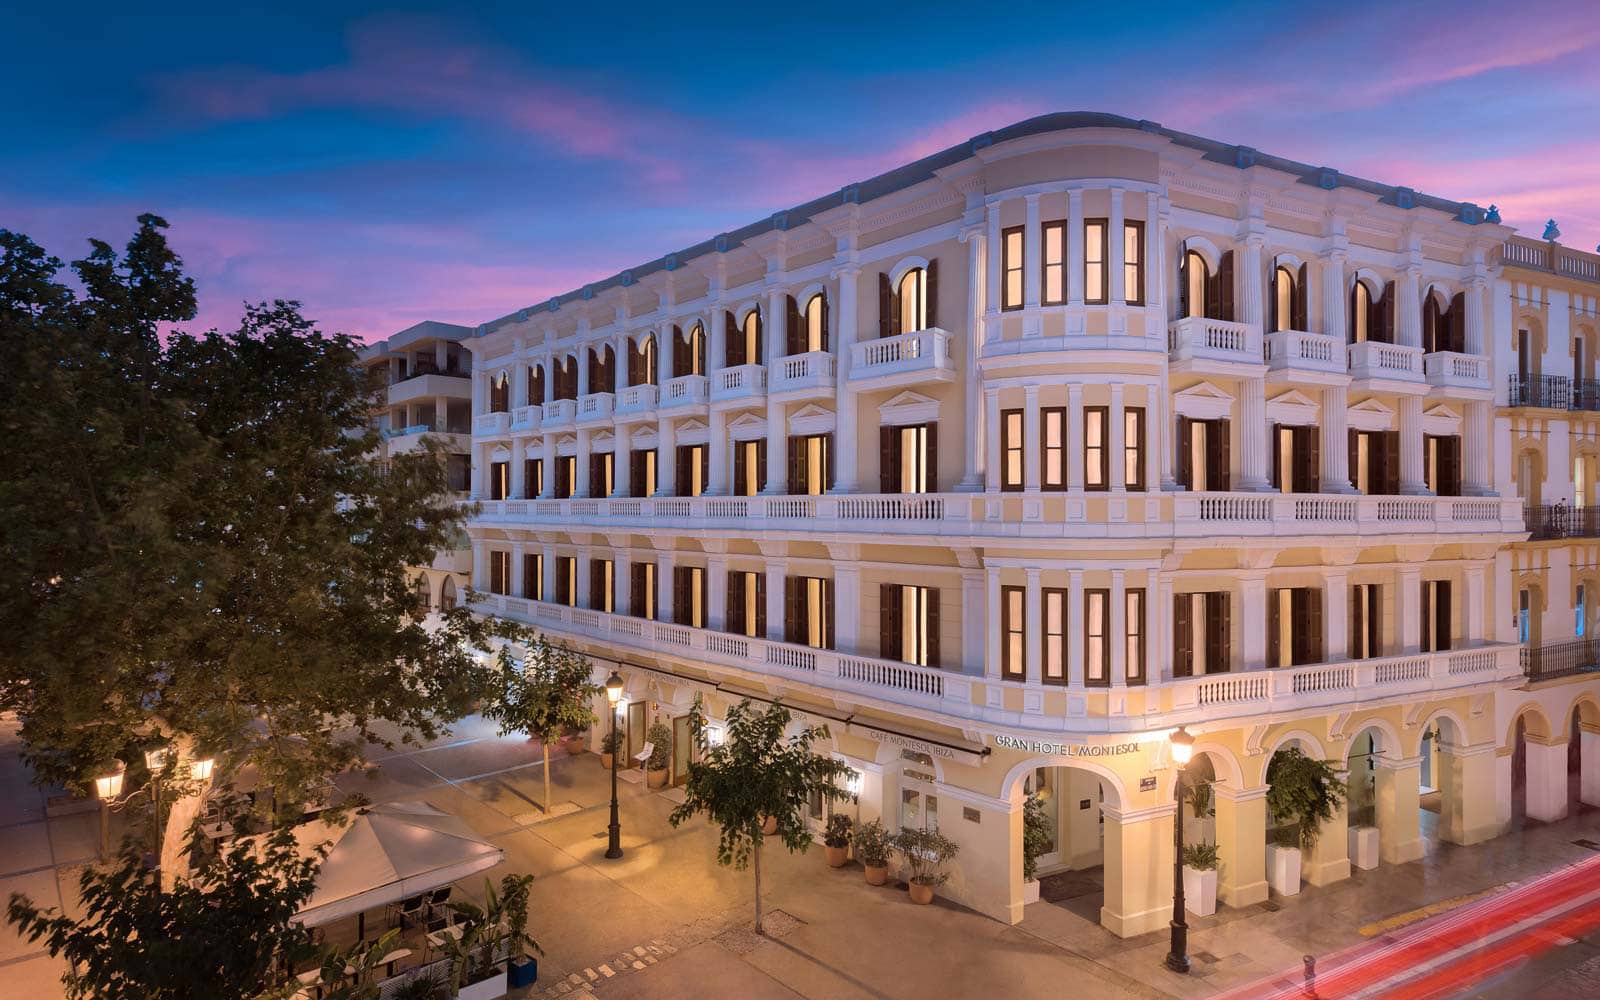 Gran Hotel Montesol Ibiza and its BMS control